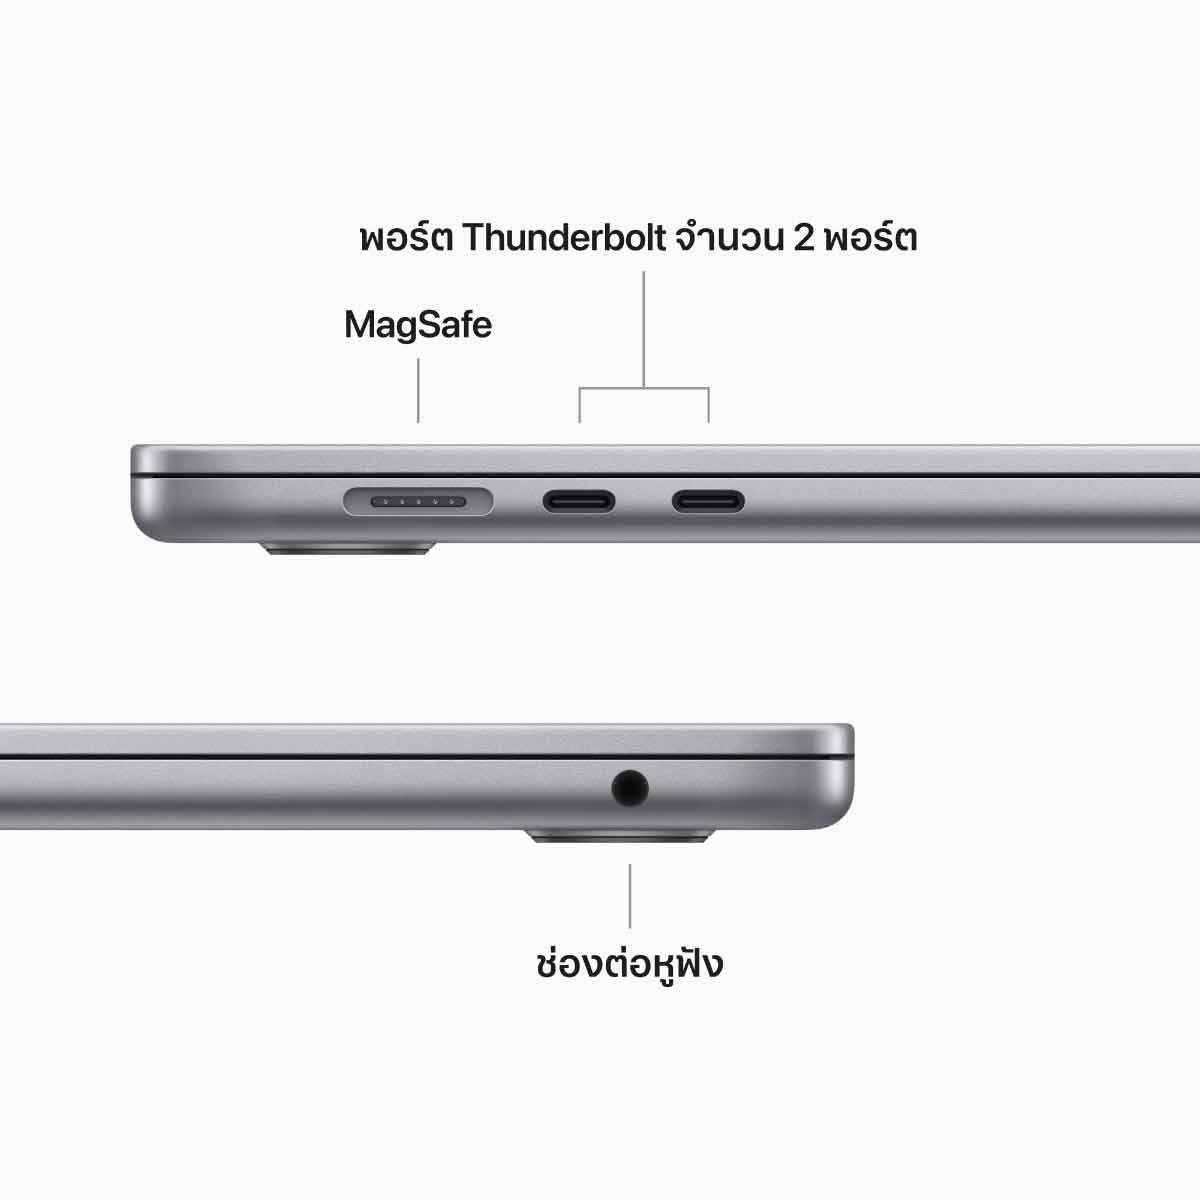 Apple  MacBook Air (รุ่น 15 นิ้ว, ชิป M2)  (256GB/Space Gray)